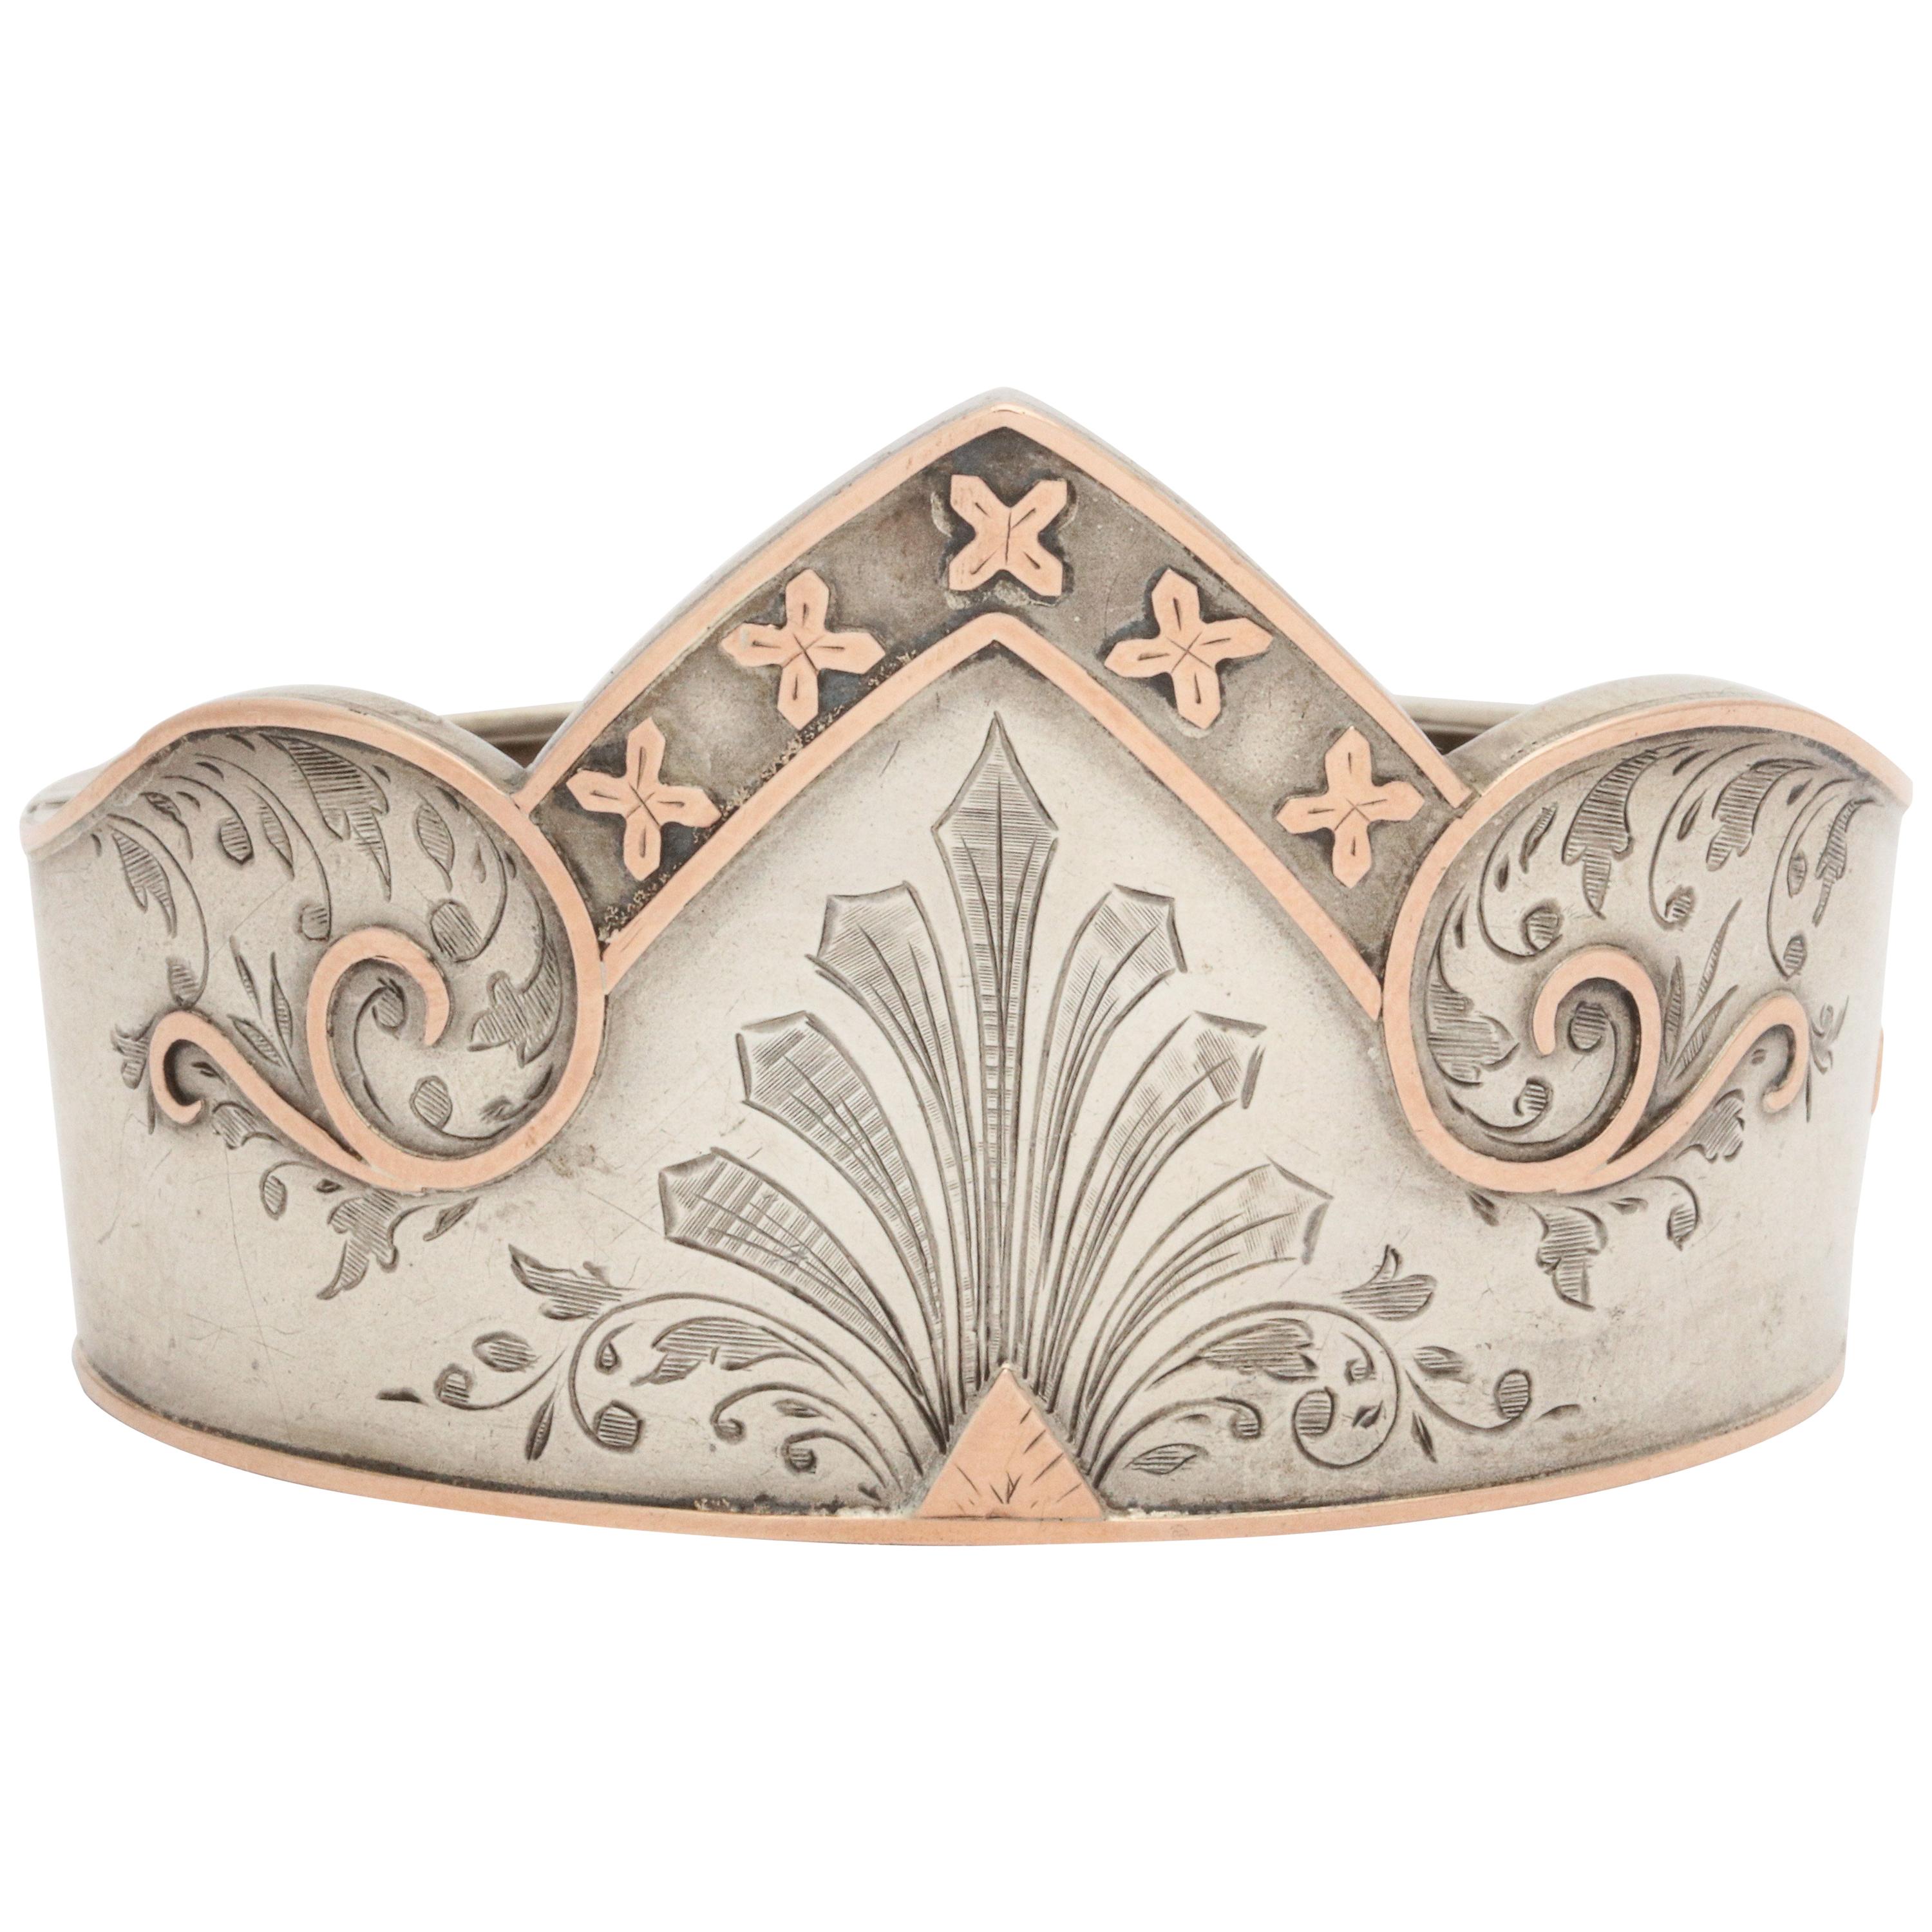 Antique Victorian Sterling Silver Cuff Bracelet